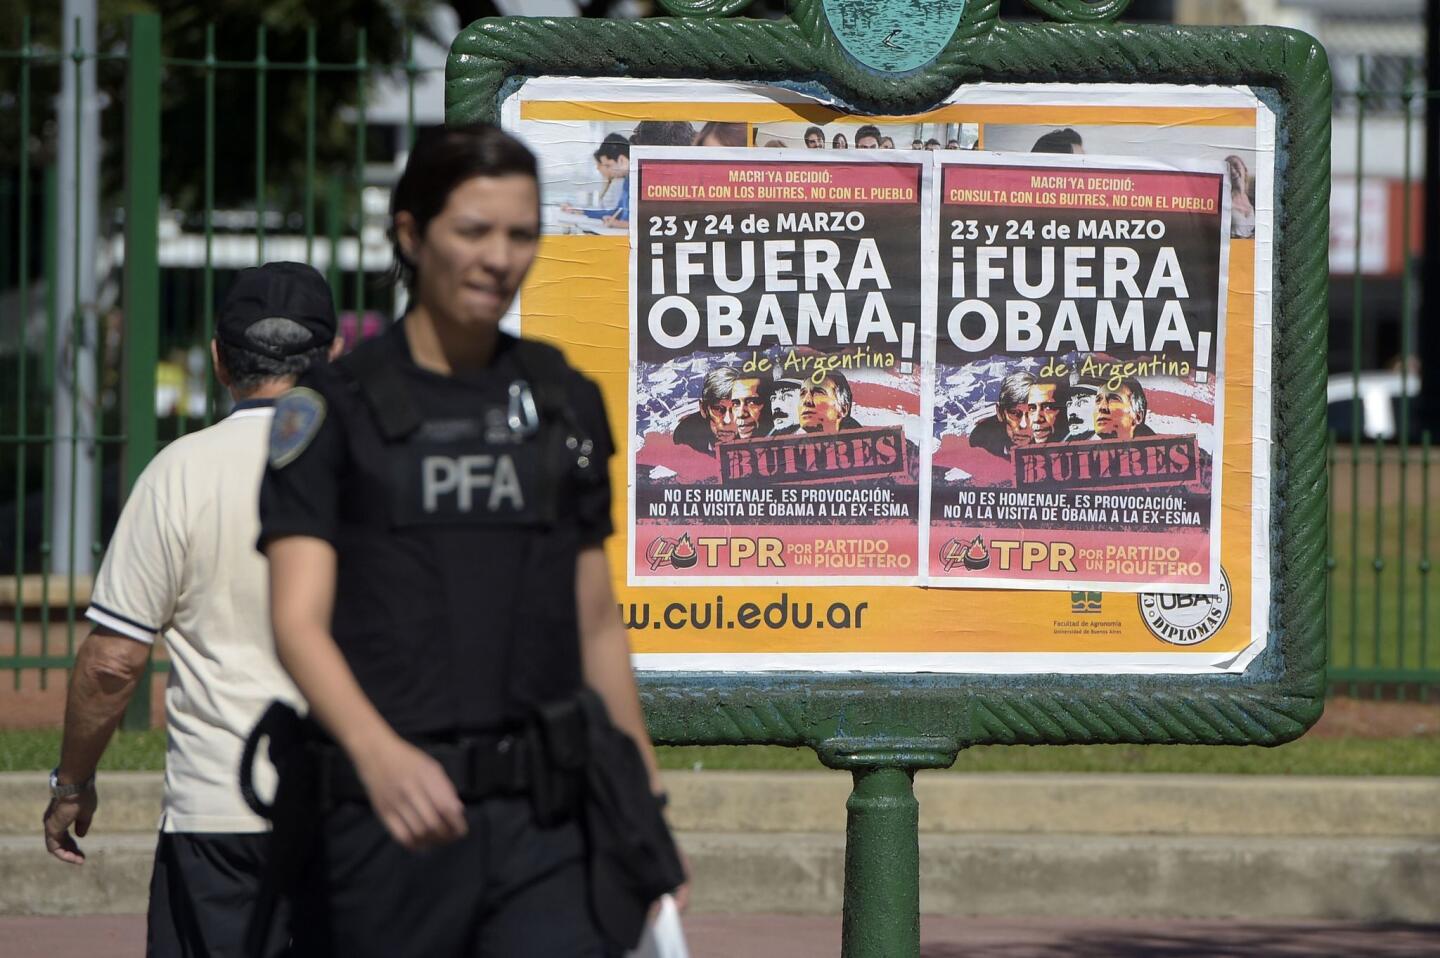 Obama in Argentina